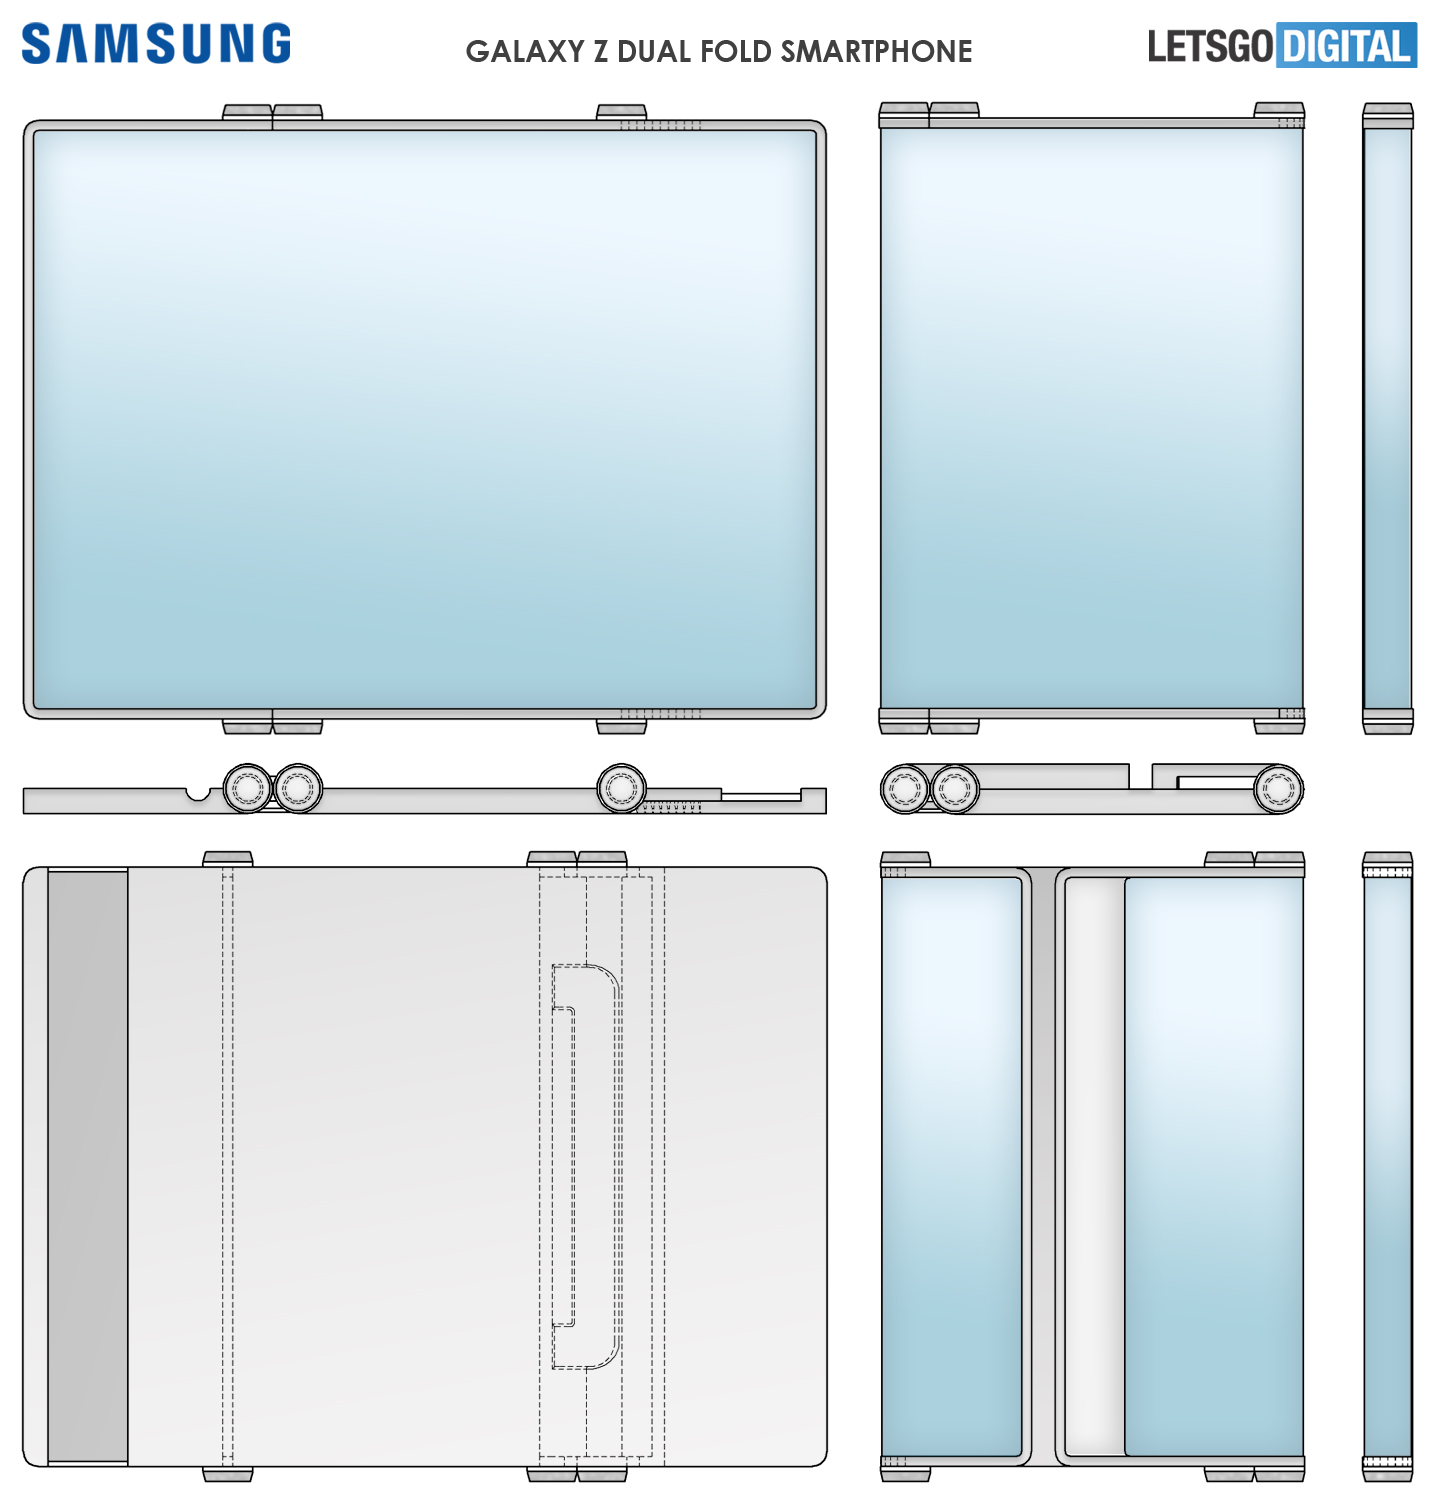 Samsung Z Dual Fold smartphone